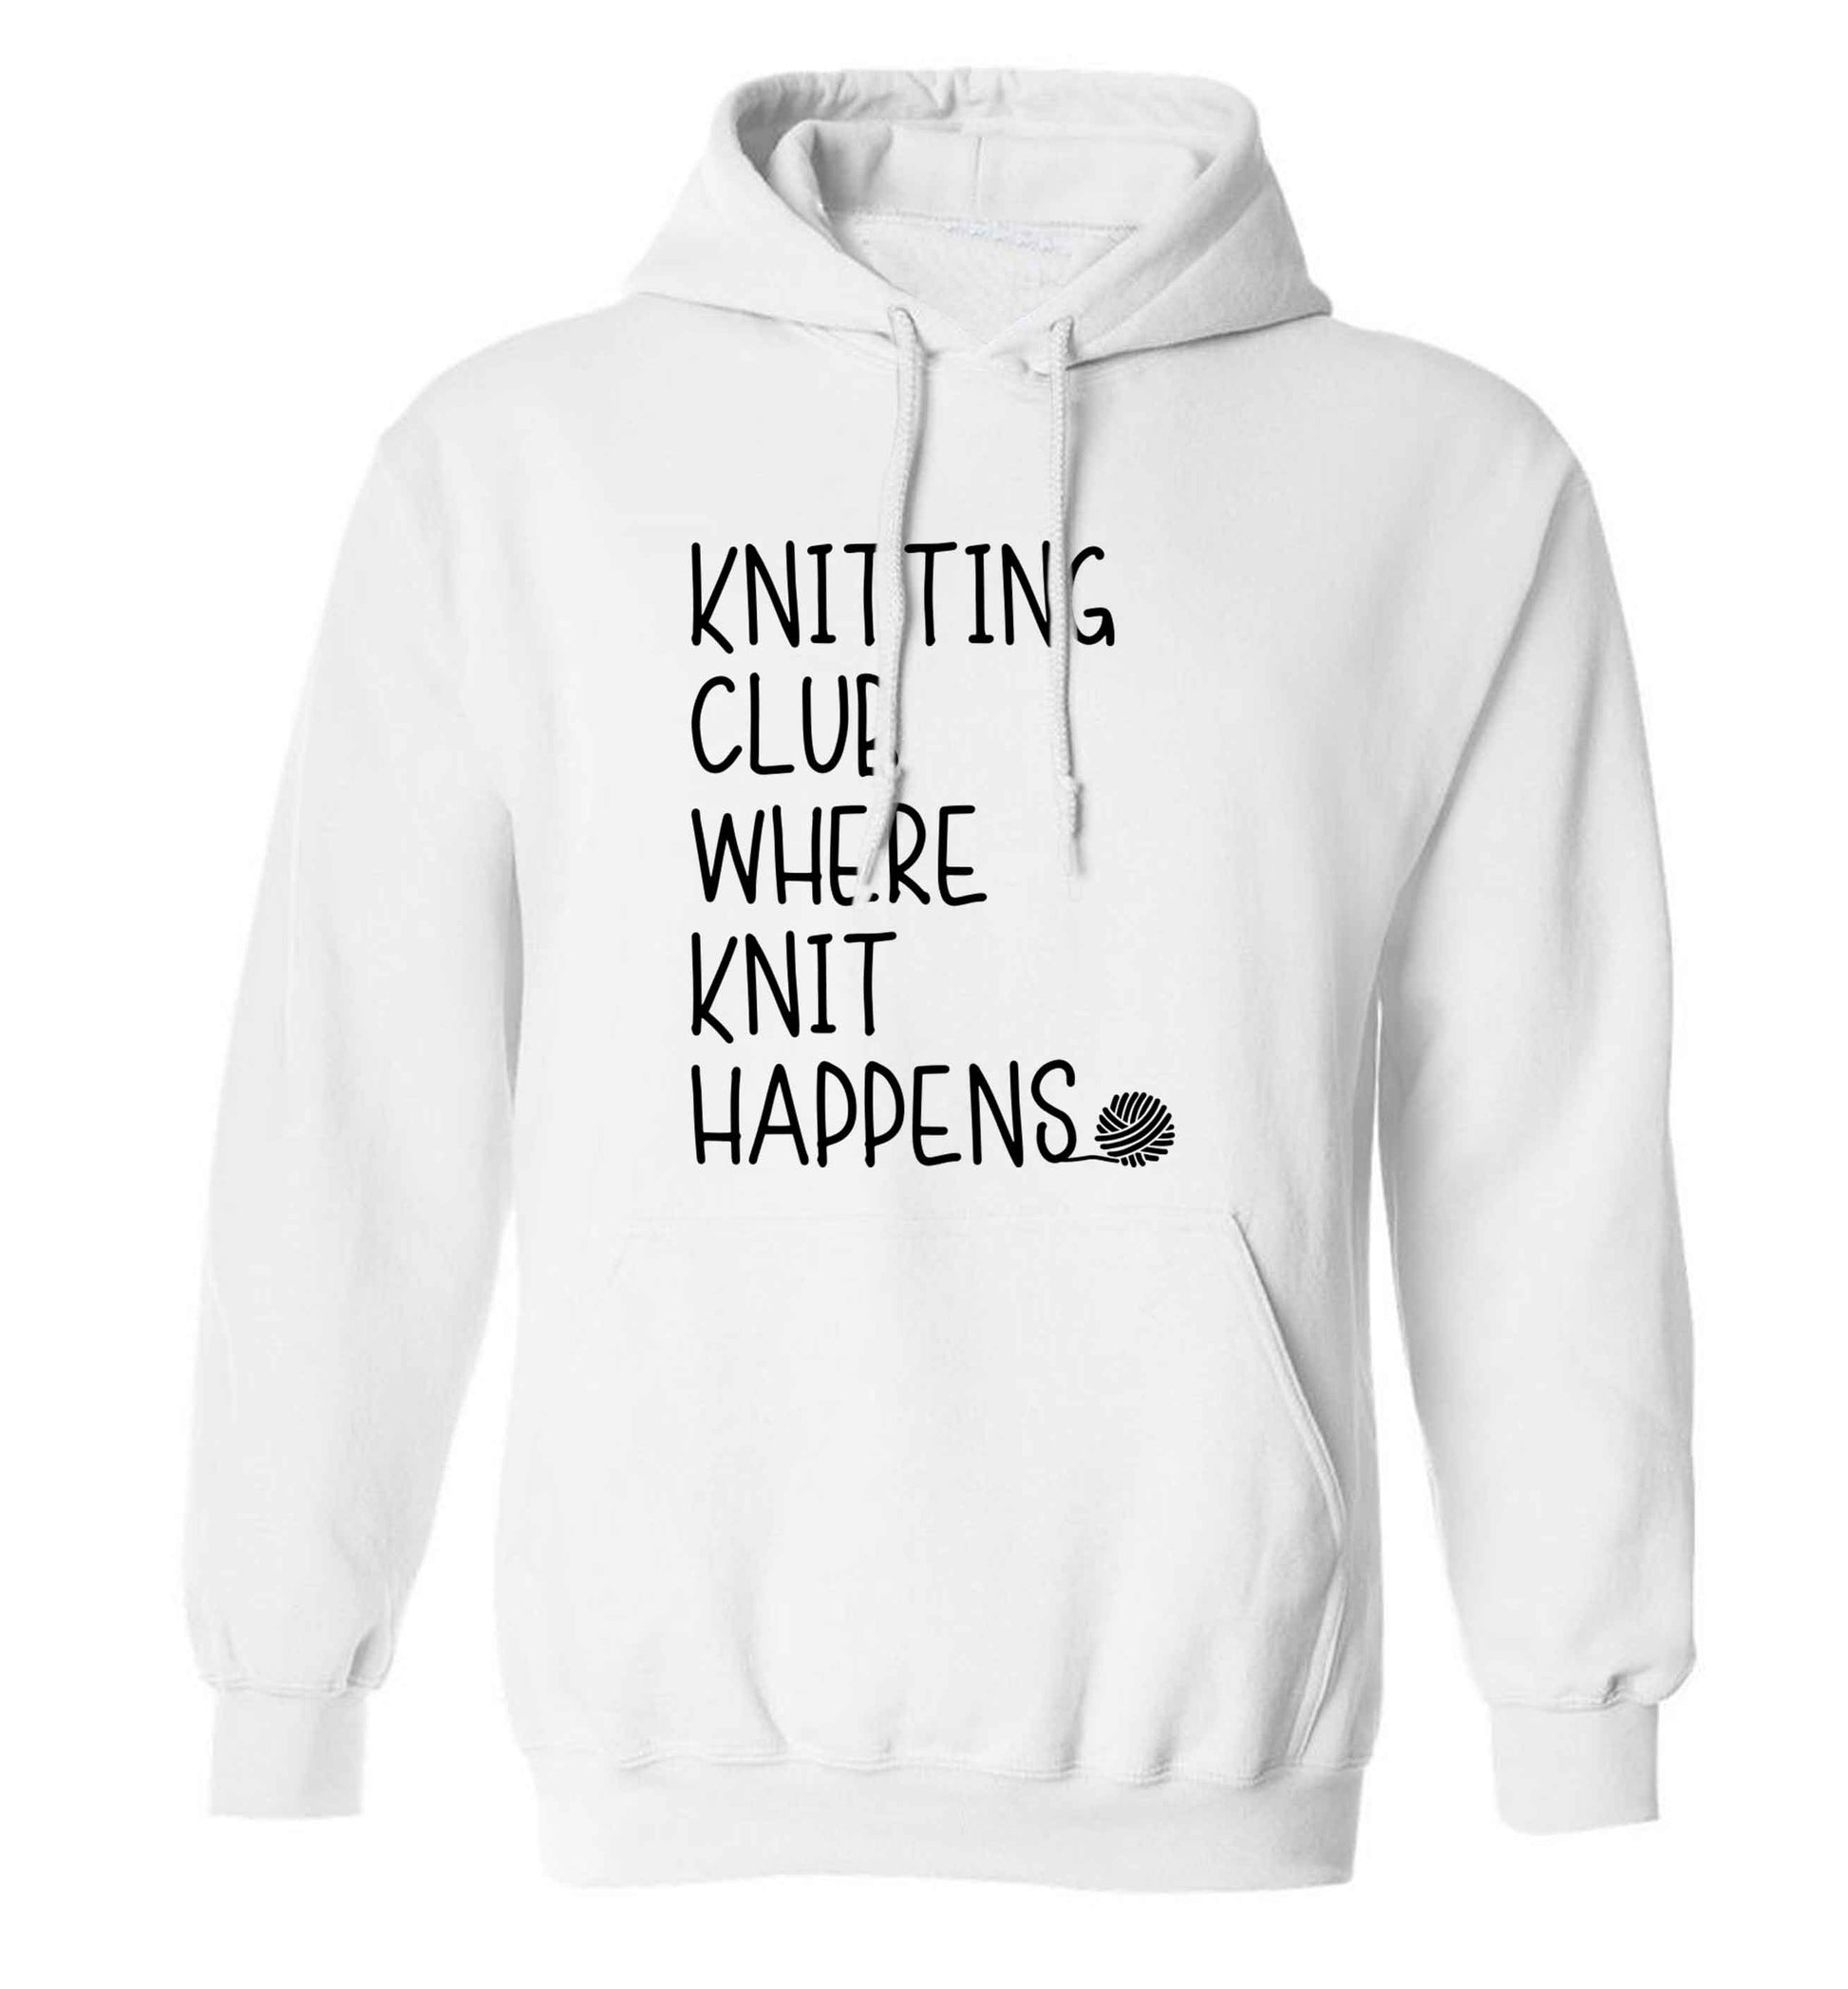 Knitting club where knit happens adults unisex white hoodie 2XL